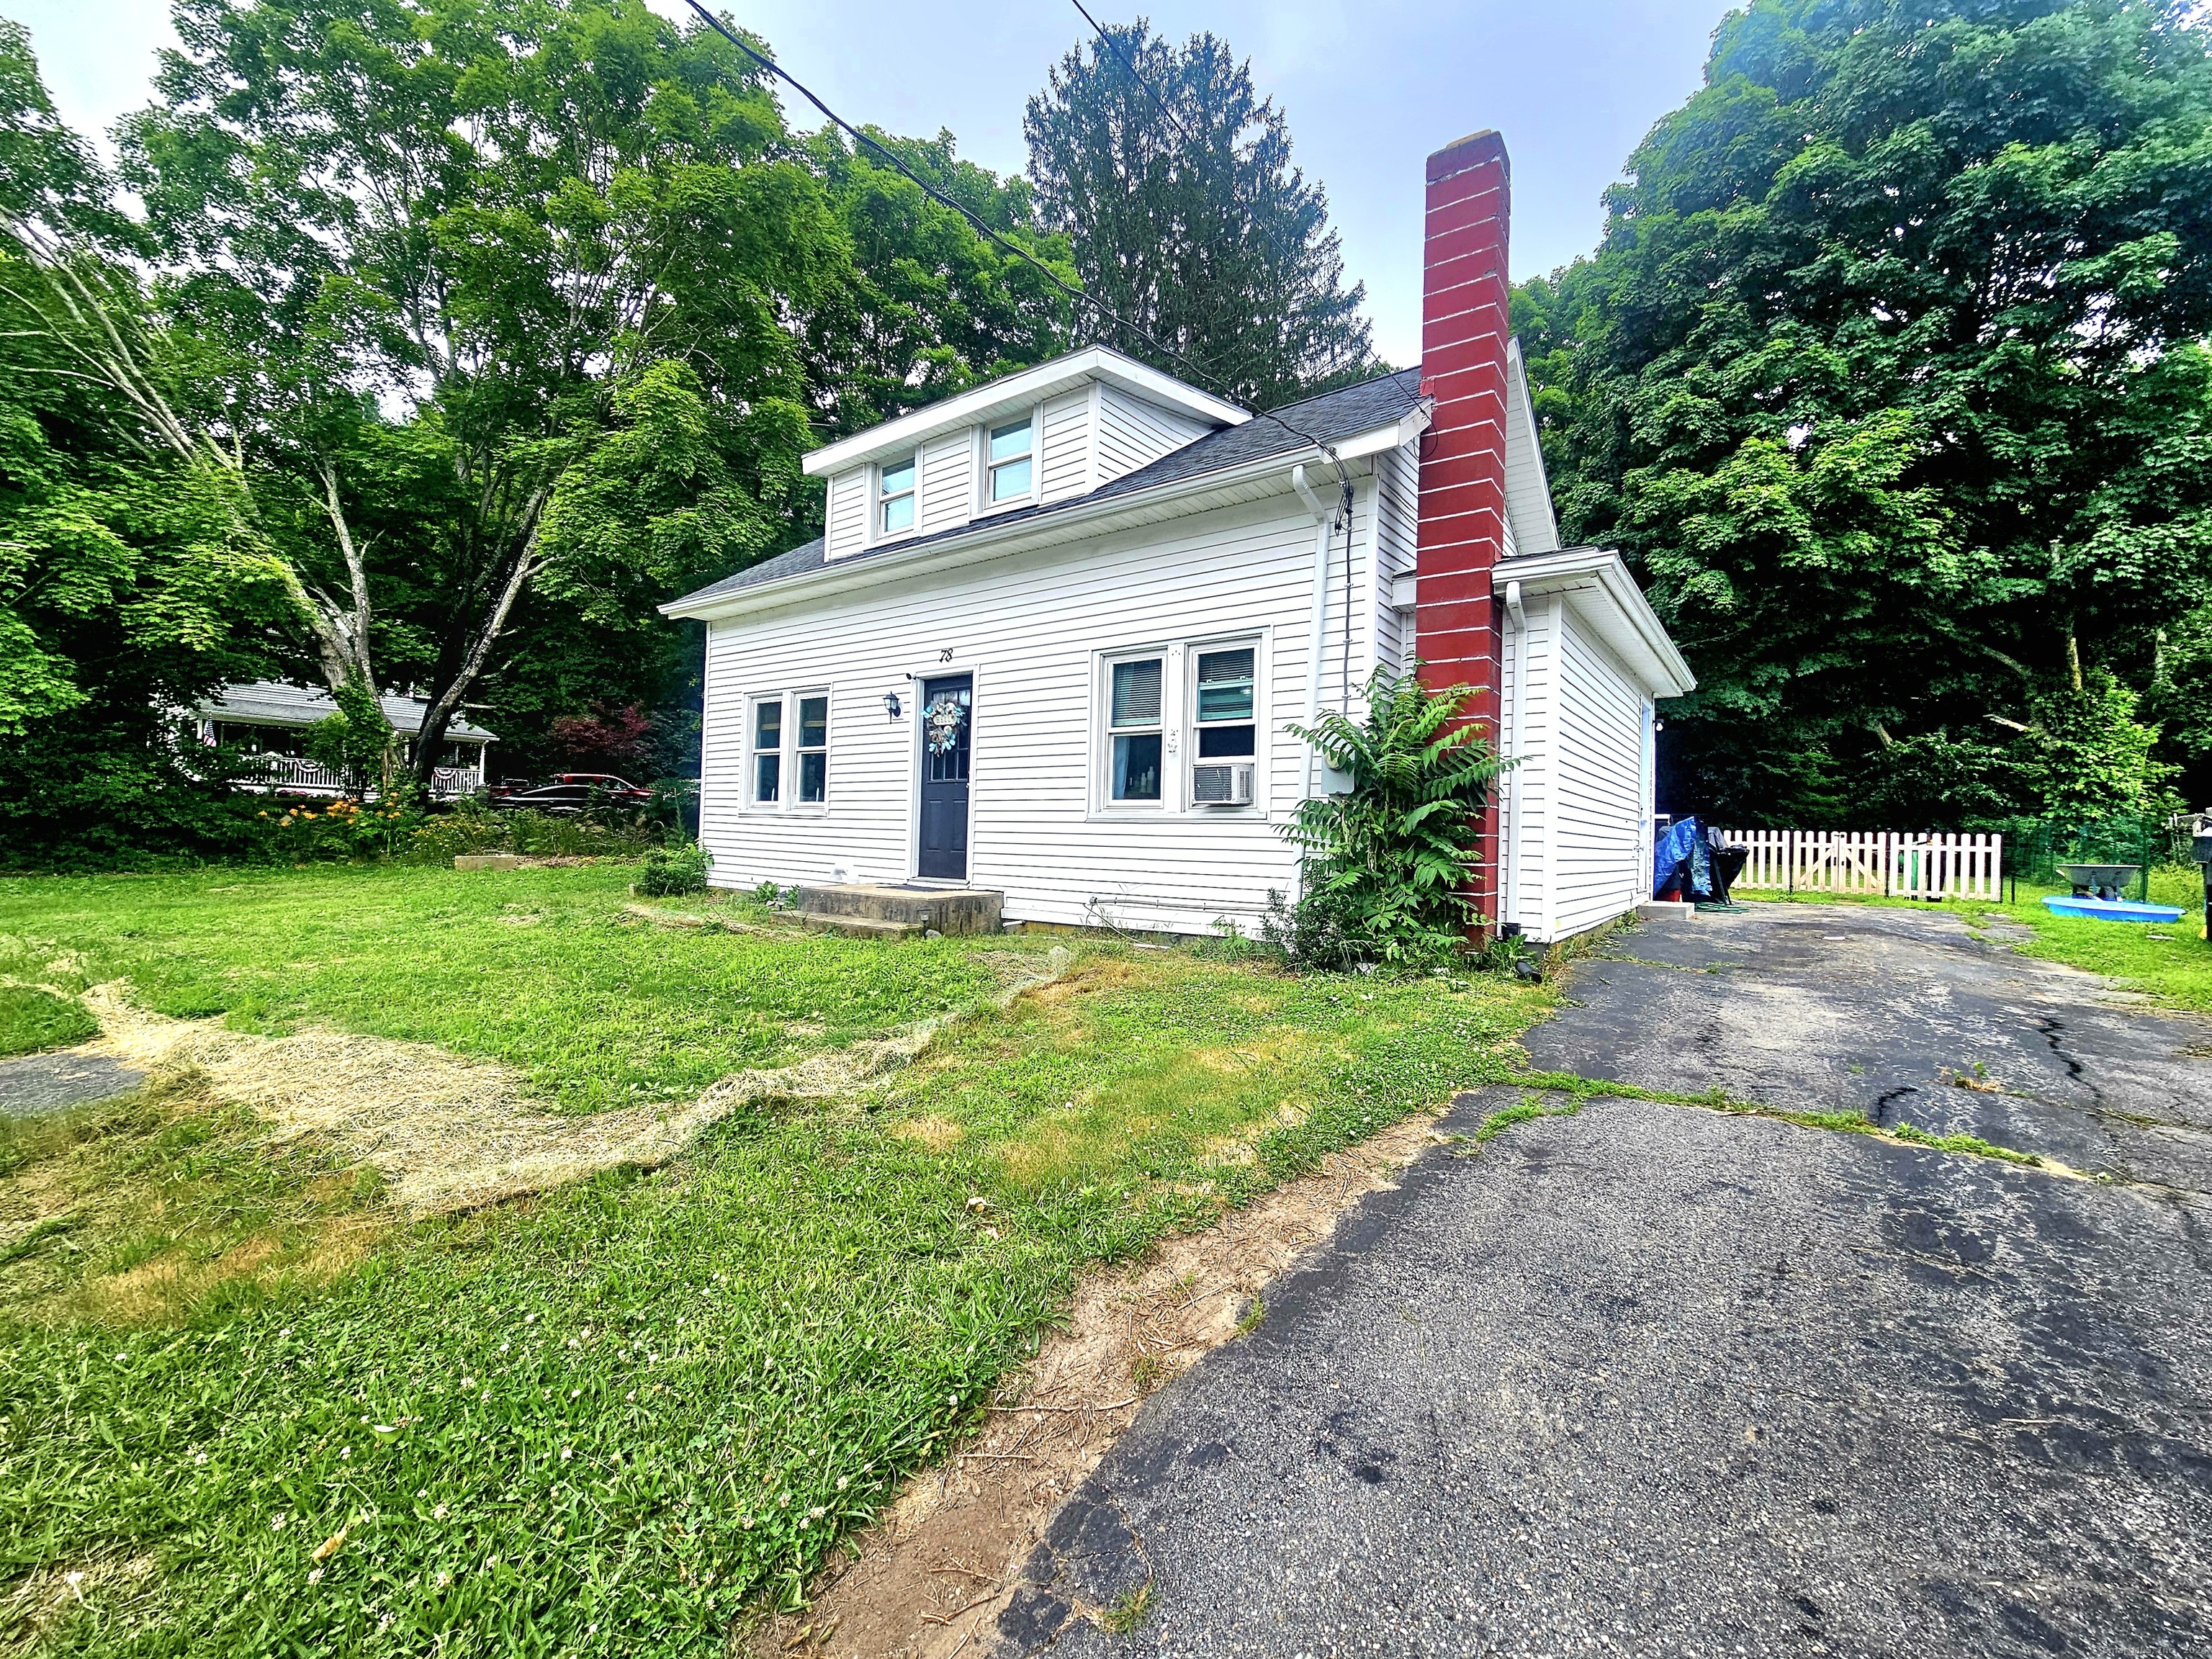 Property for Sale at 78 Lillibridge Avenue, Voluntown, Connecticut - Bedrooms: 3 
Bathrooms: 1 
Rooms: 7  - $269,900